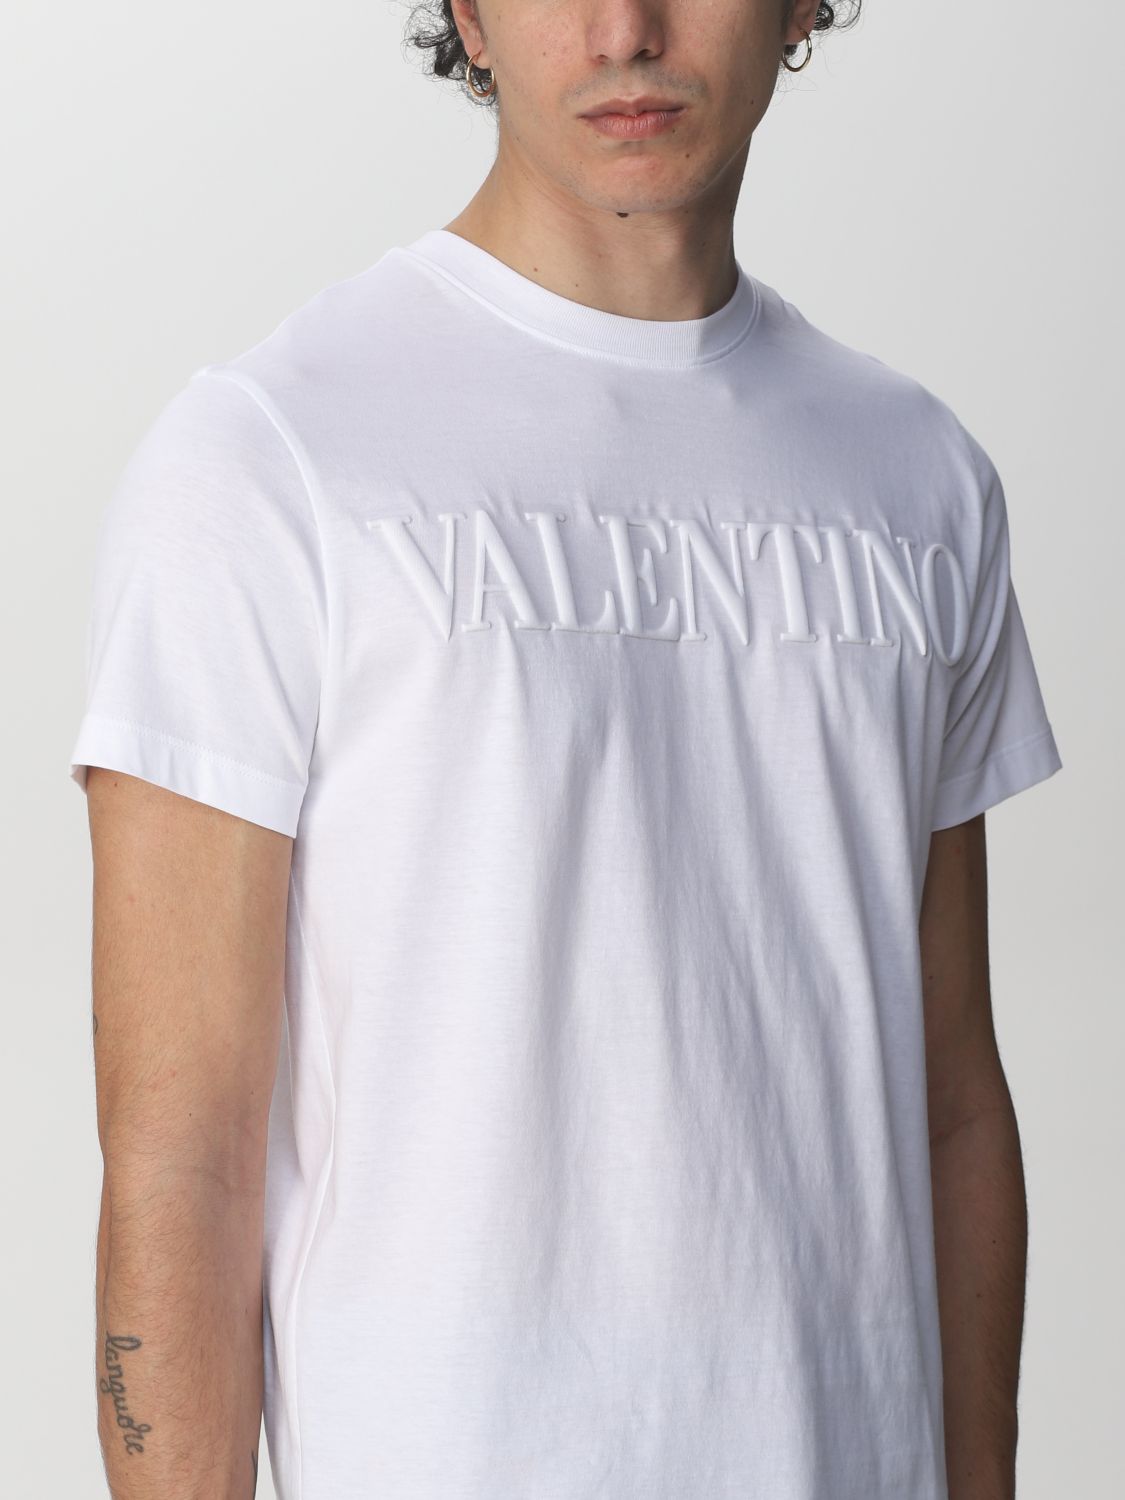 T-shirt Valentino Garavani Black size L International in Cotton - 11953426